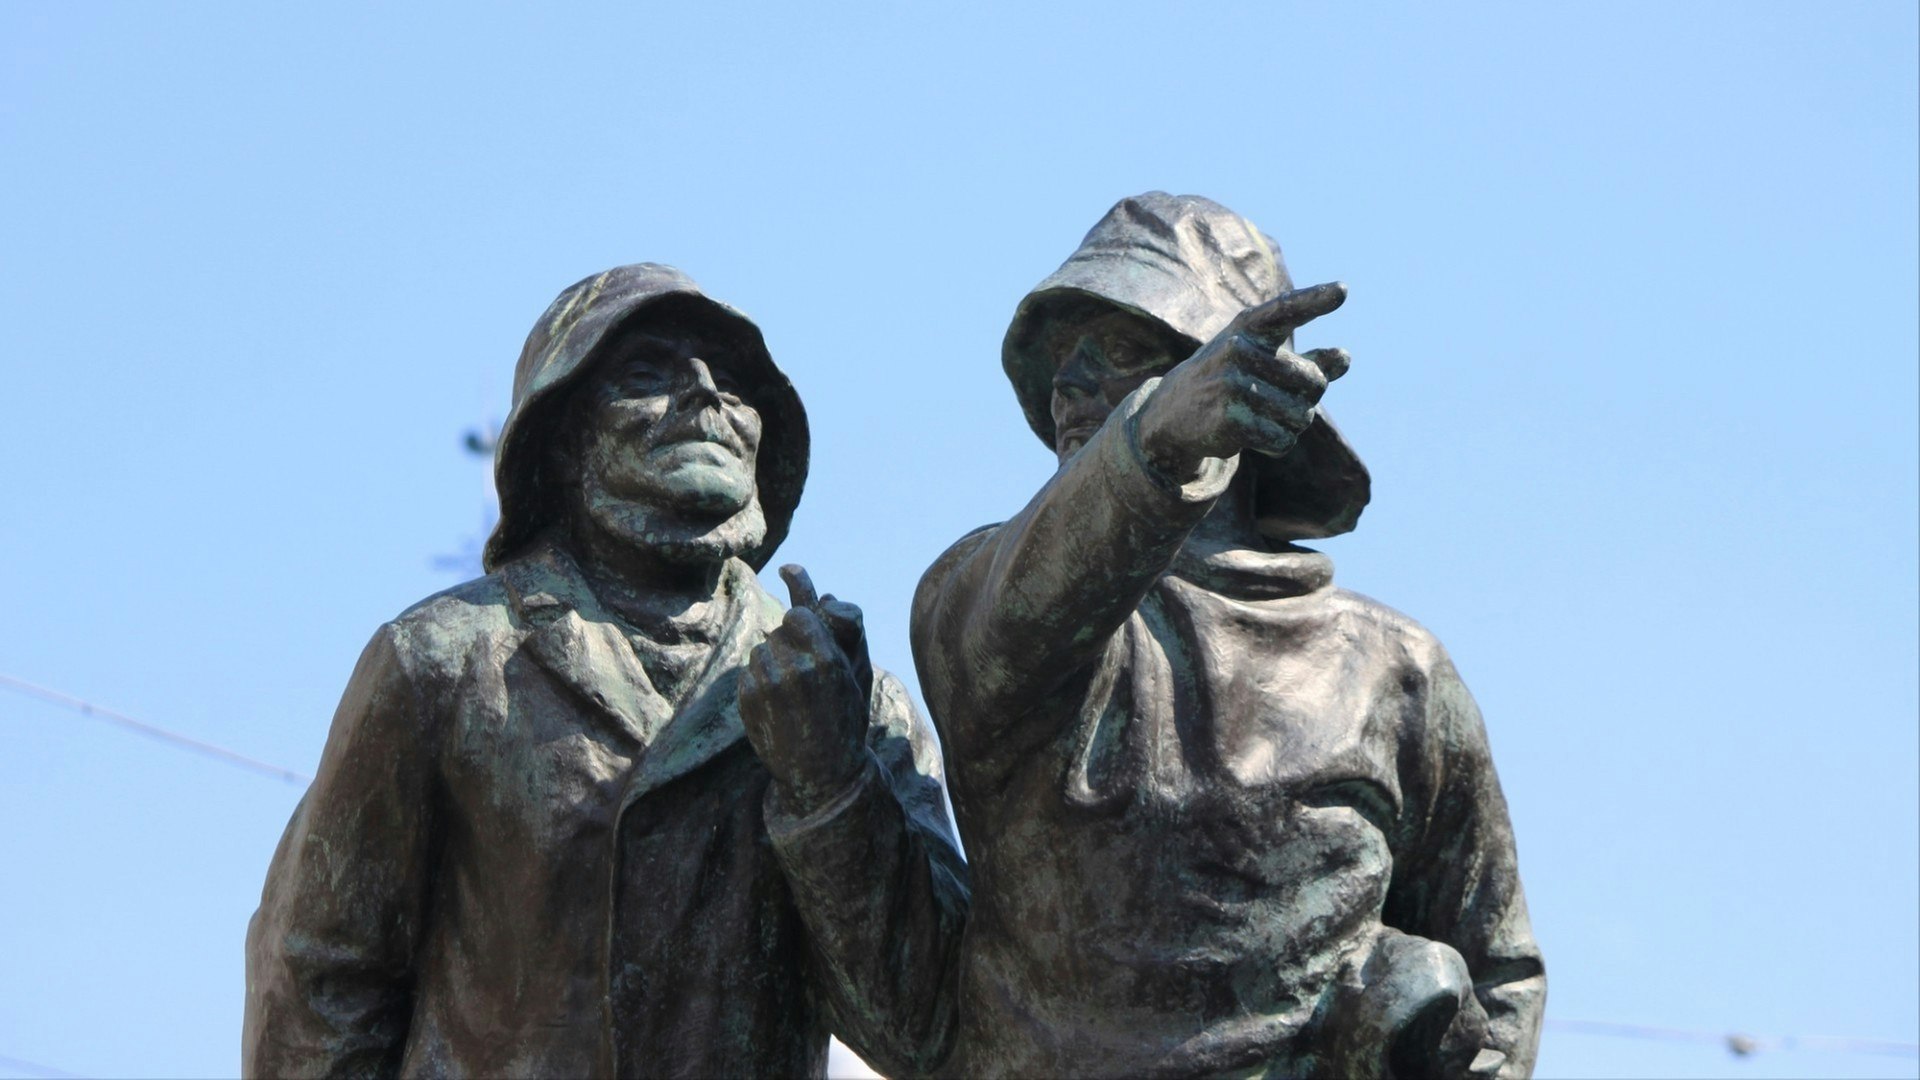 Statues of the two fishermen in Haugesund, Scandanavia